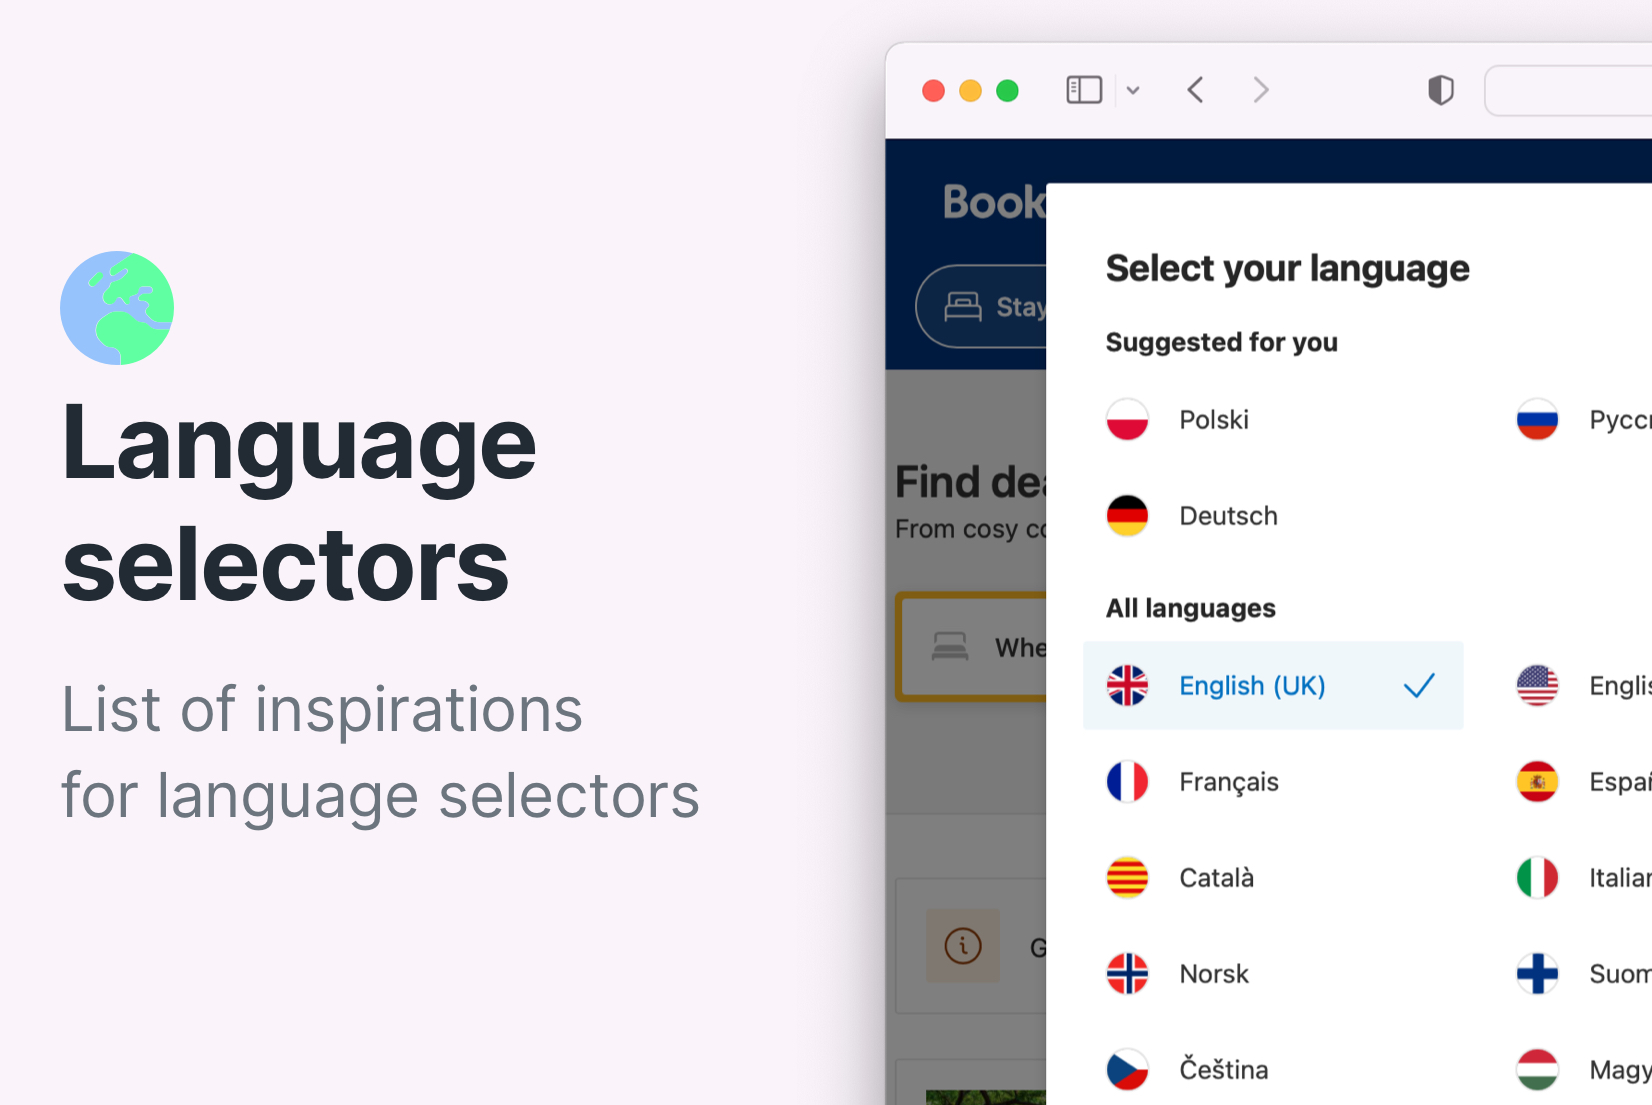 UI Design: Language selectors